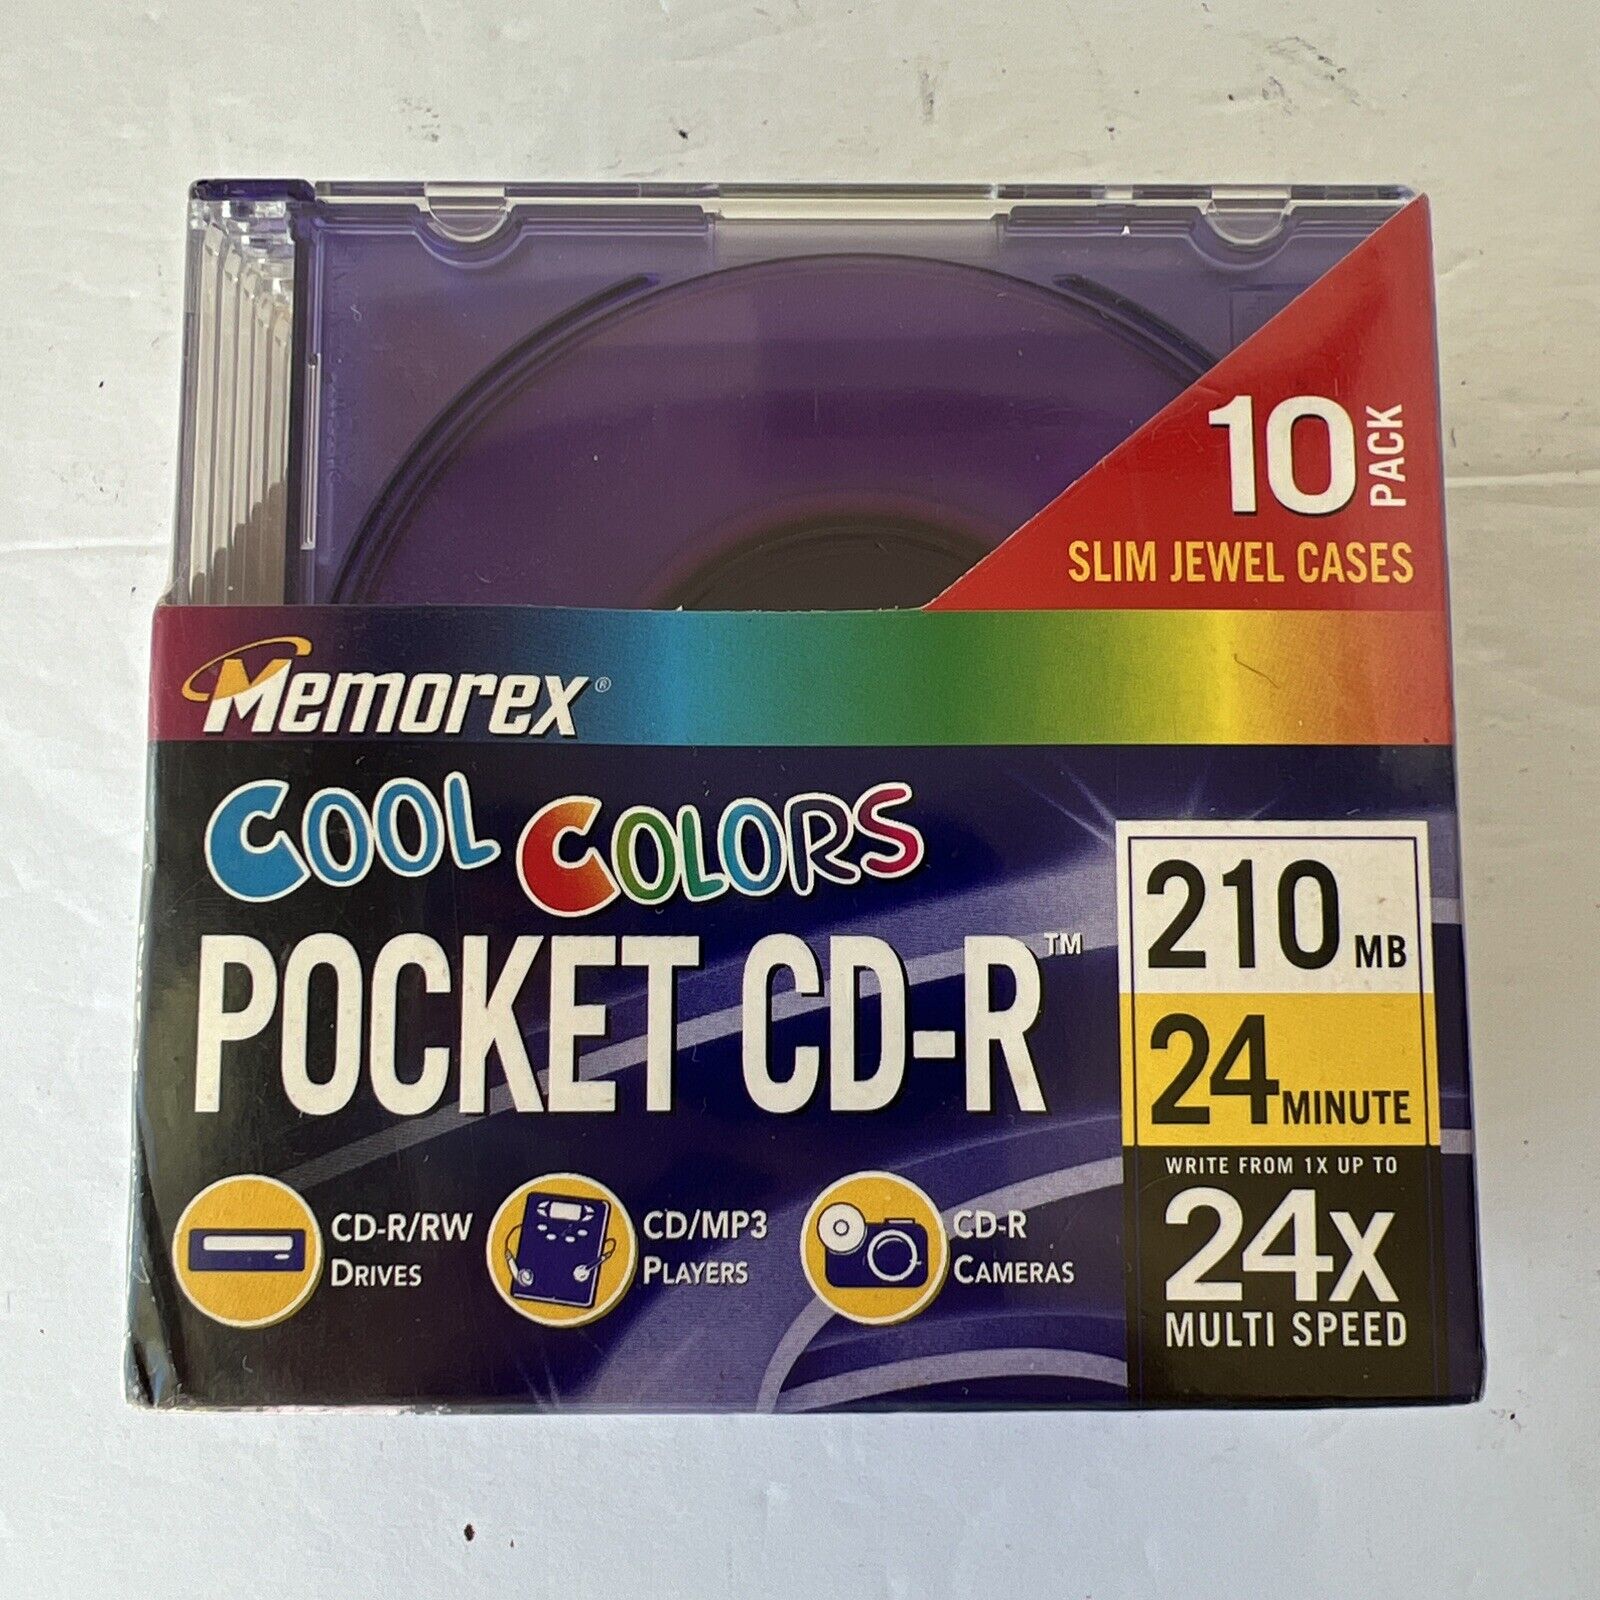 Memorex Cool Colors New 10-Pack of  Pocket CD-R 24X 210 MB 24 Minute Sealed